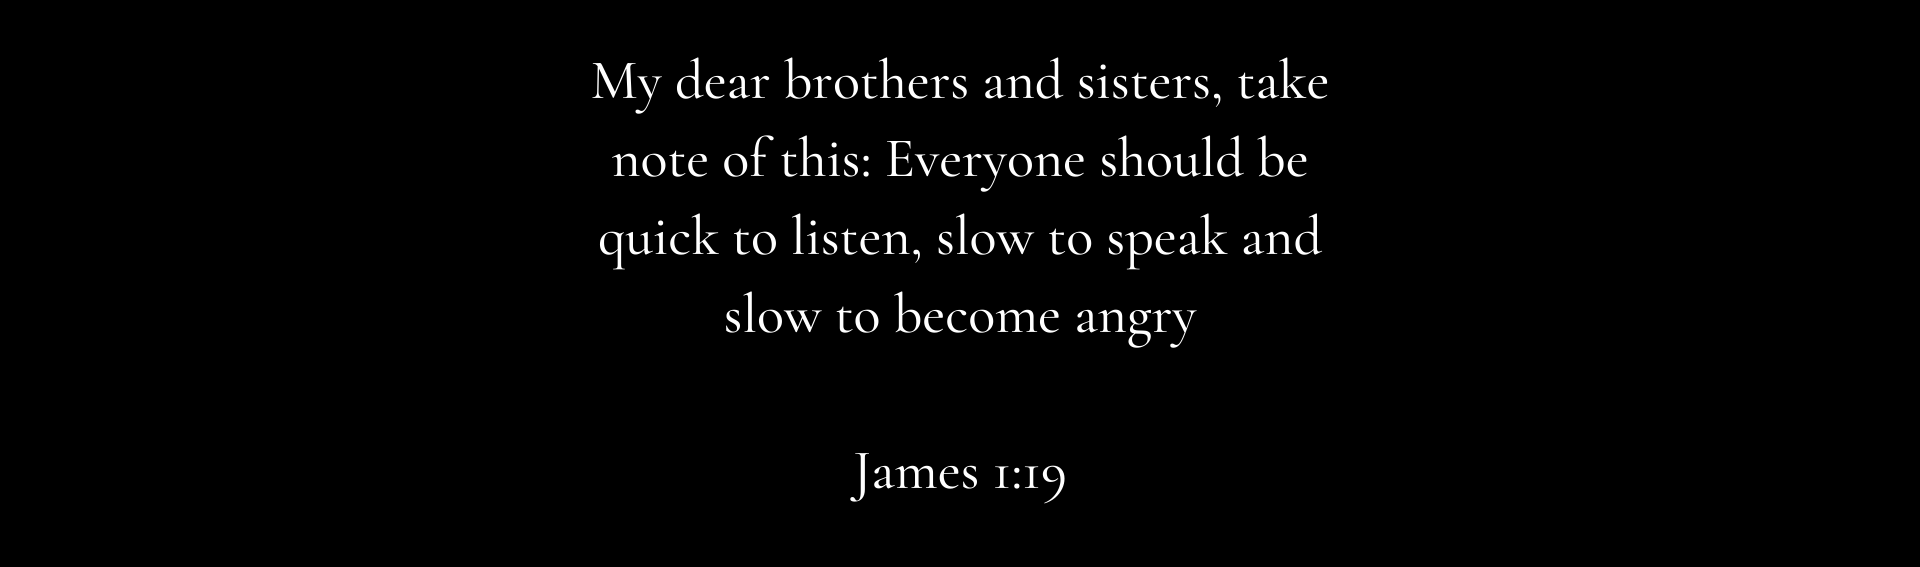 Bible passage - James 1:19